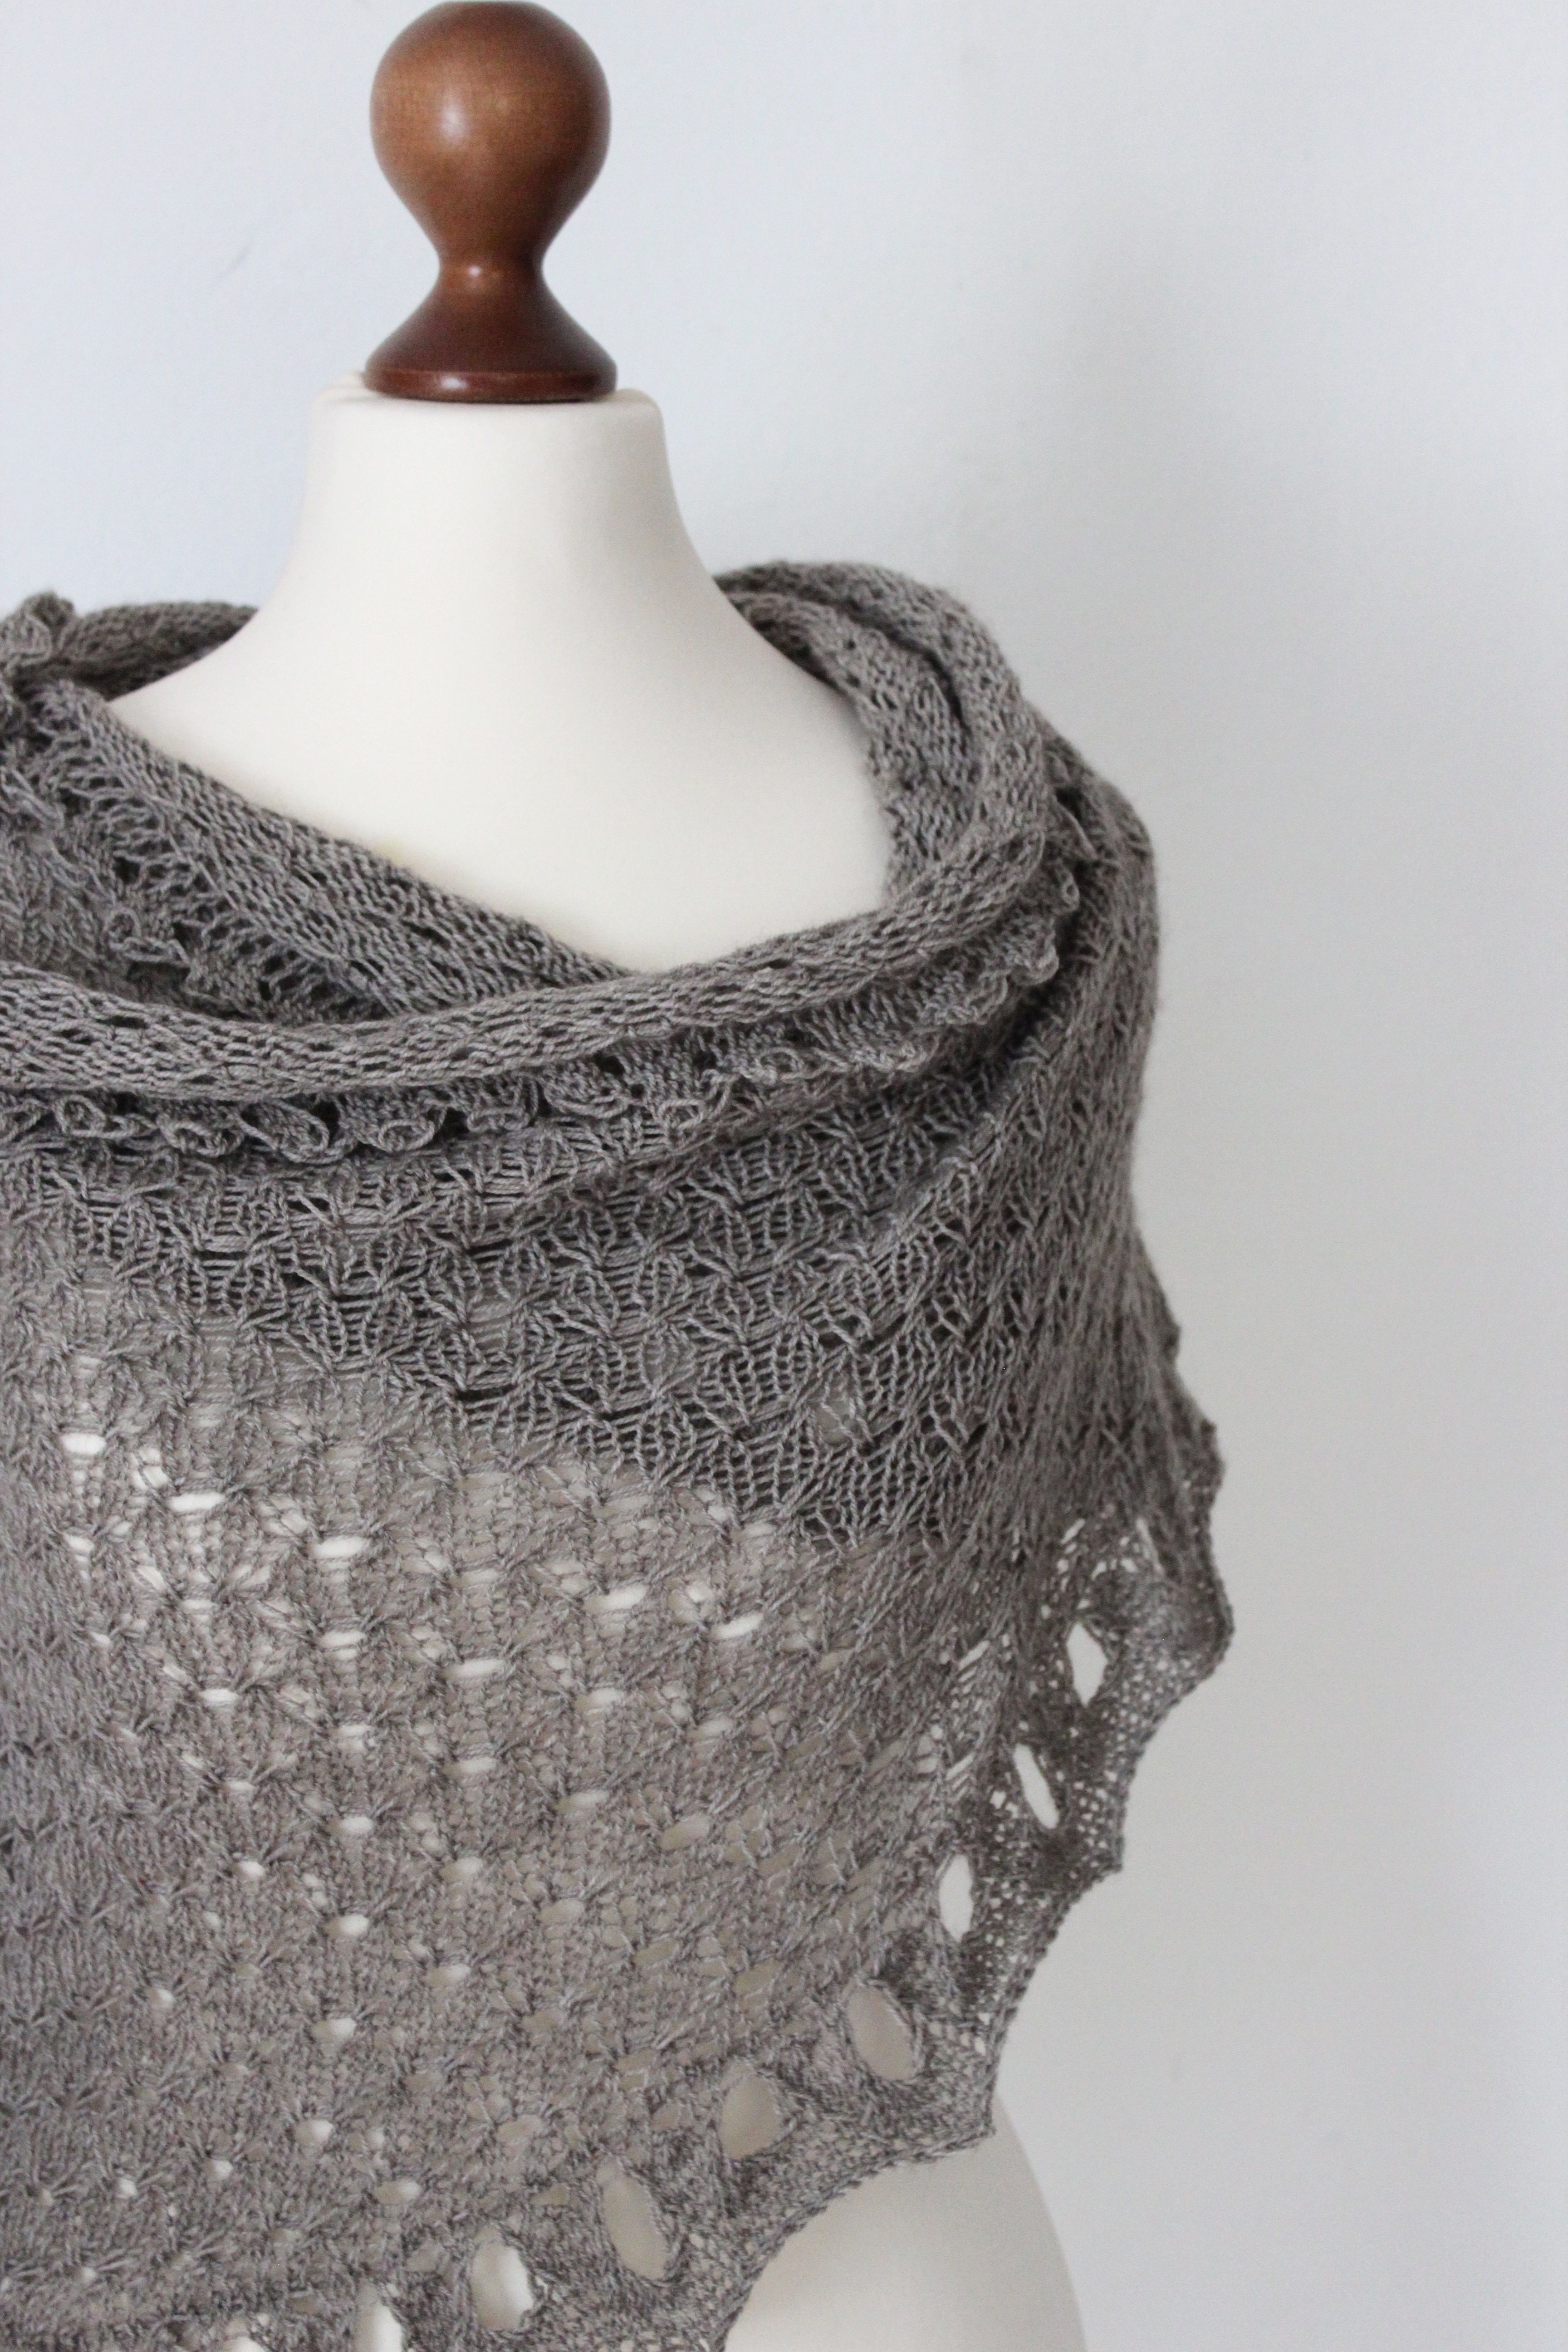 The Indulgent Spirit shawl knitting pattern